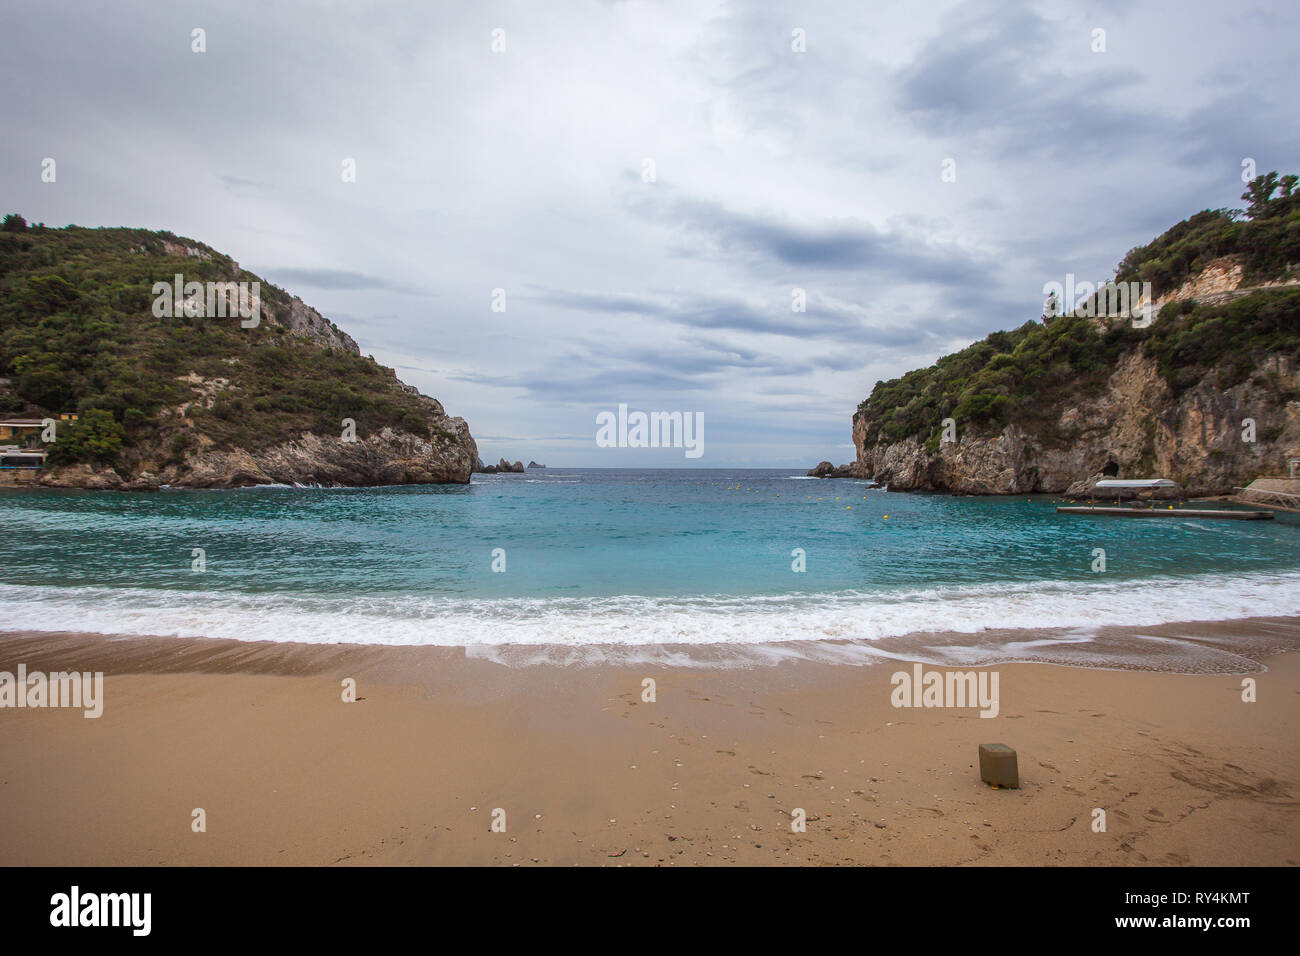 Paleokastritsa bay cliffs and beach with Kolyviri island background on a rainy day, Corfu Island, Greece Stock Photo